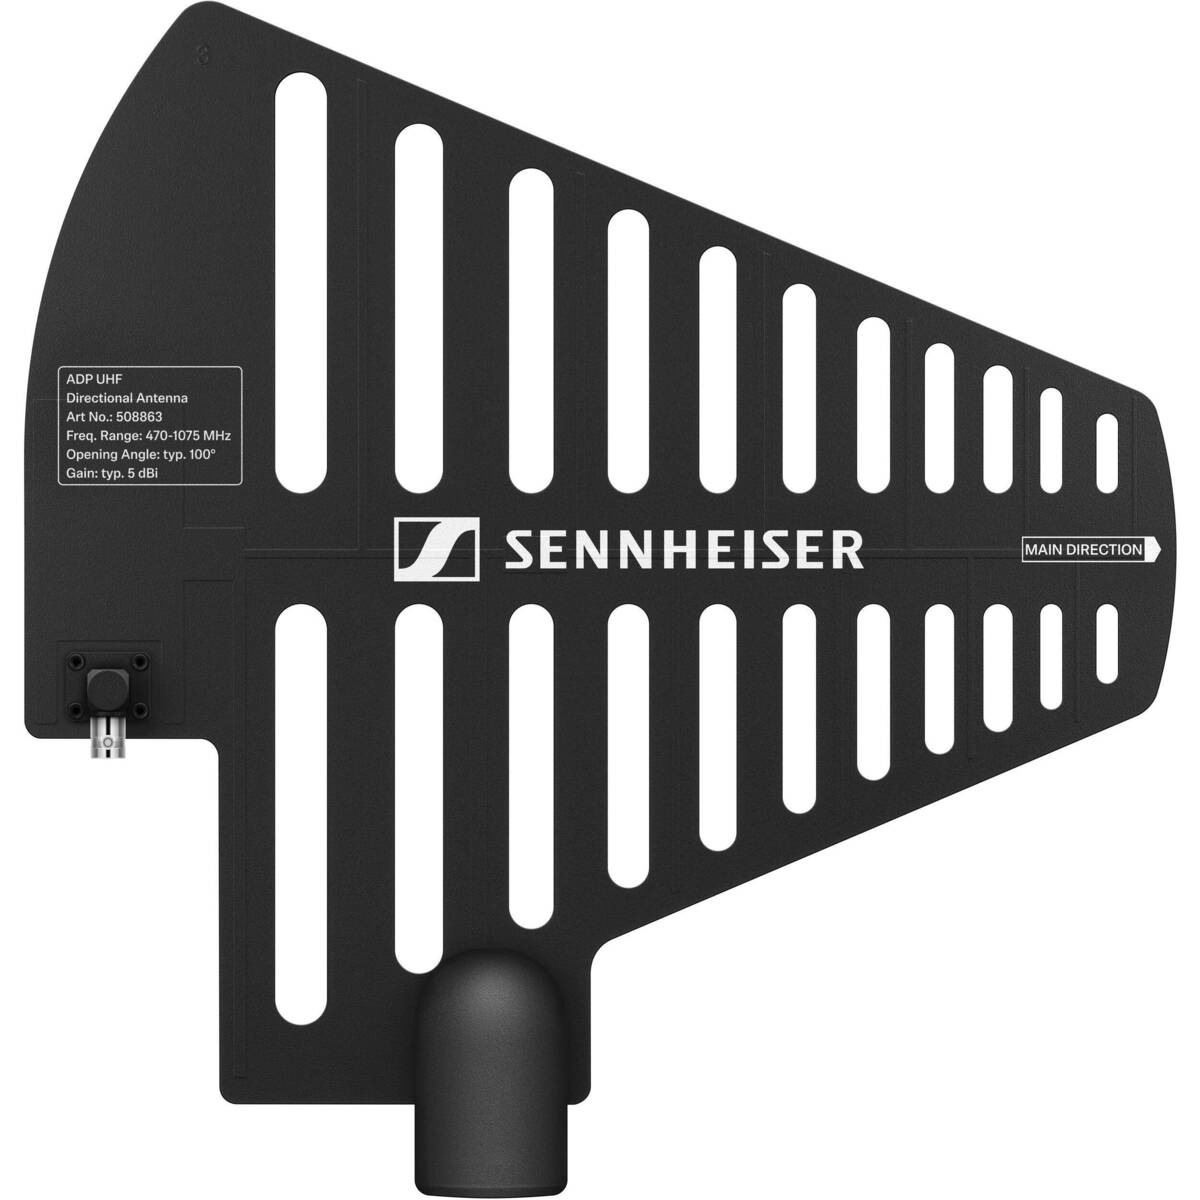 Sennheiser ADP UHF 470-1075 MHz - passive directional antenna